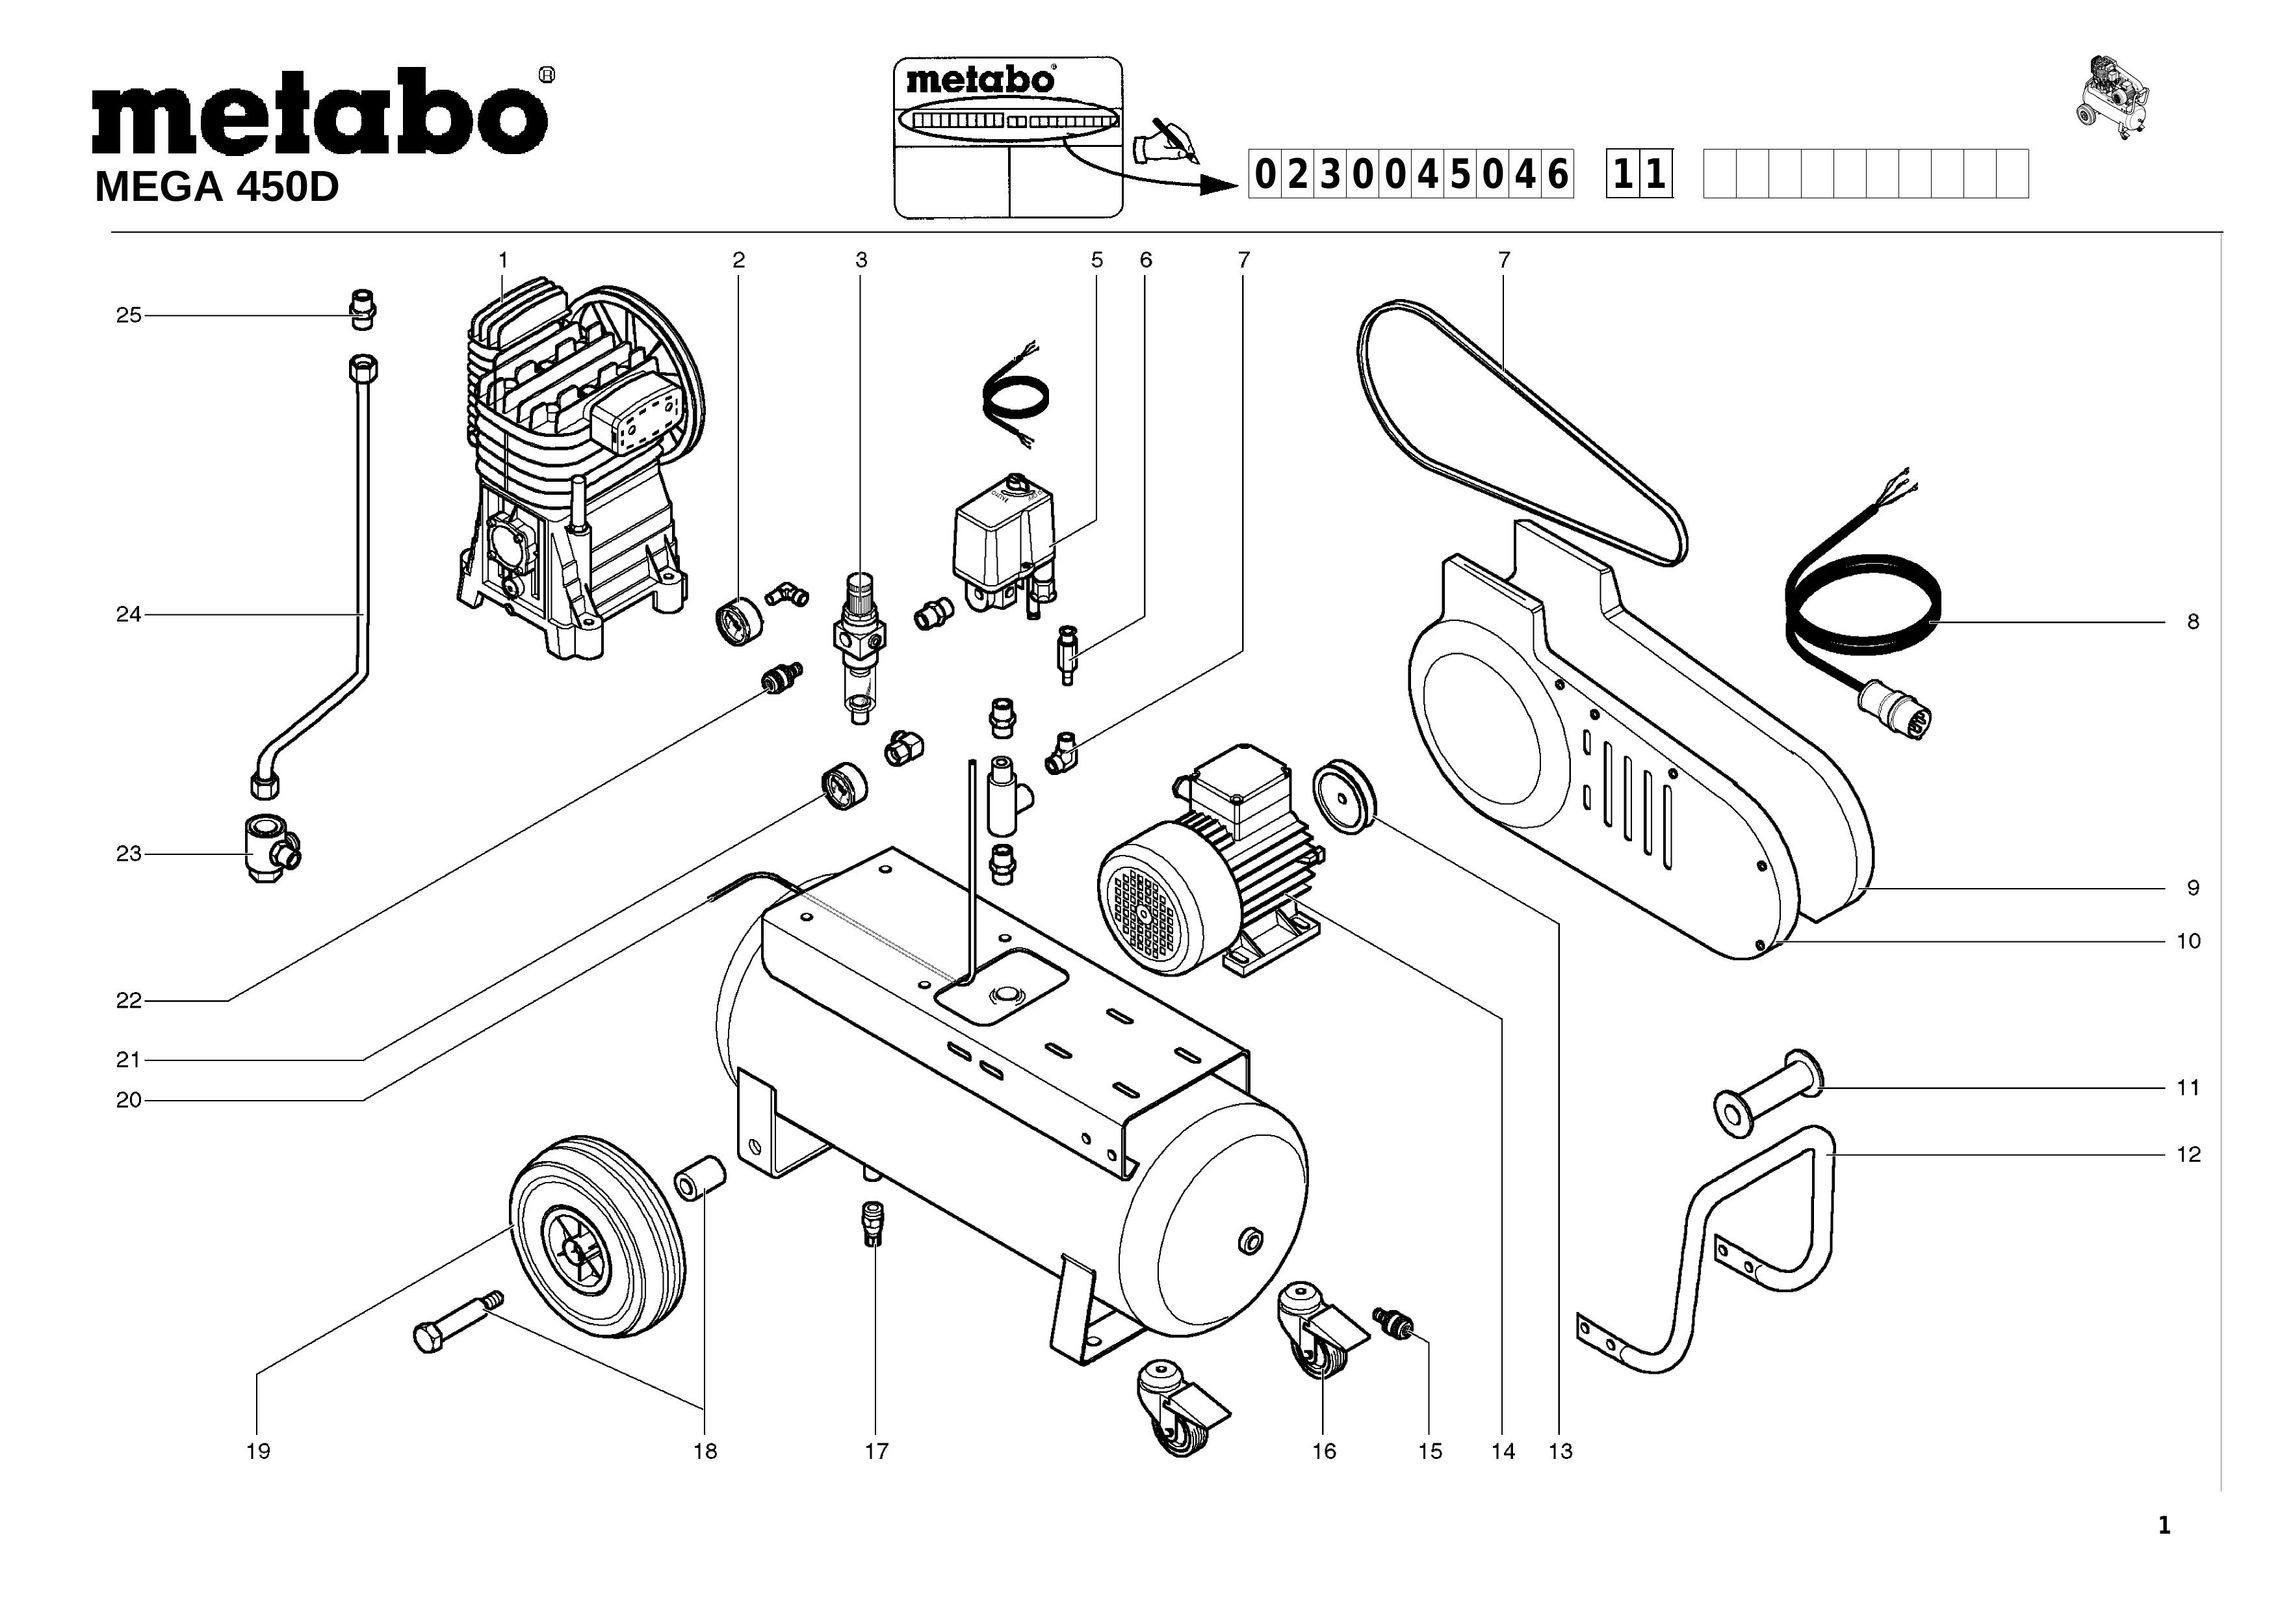 Metabo MEGA 450D Air Compressor User Manual